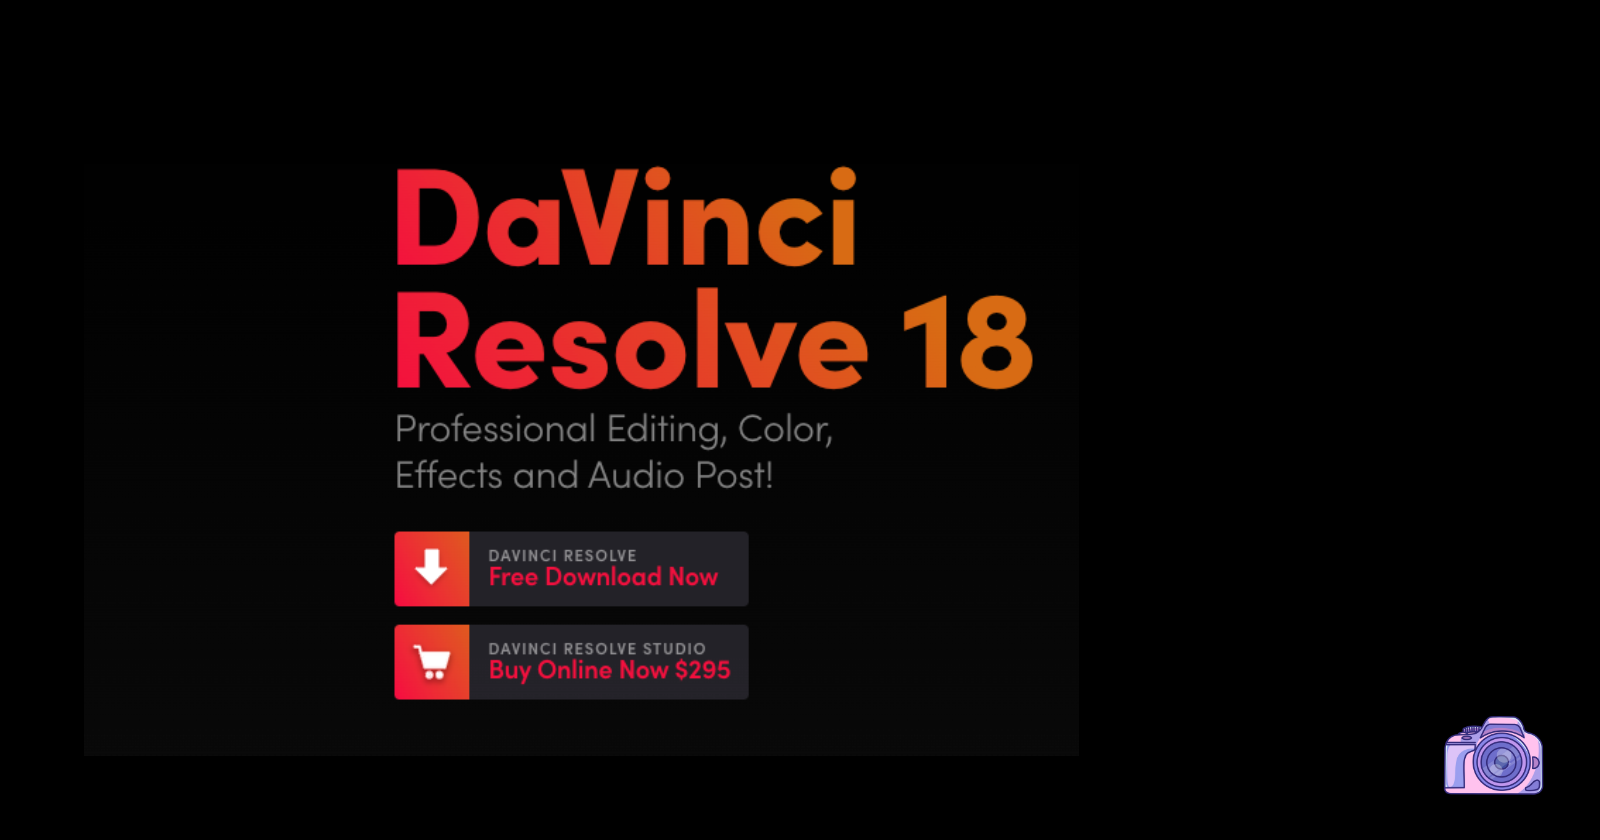 How To Download DaVinci Resolve